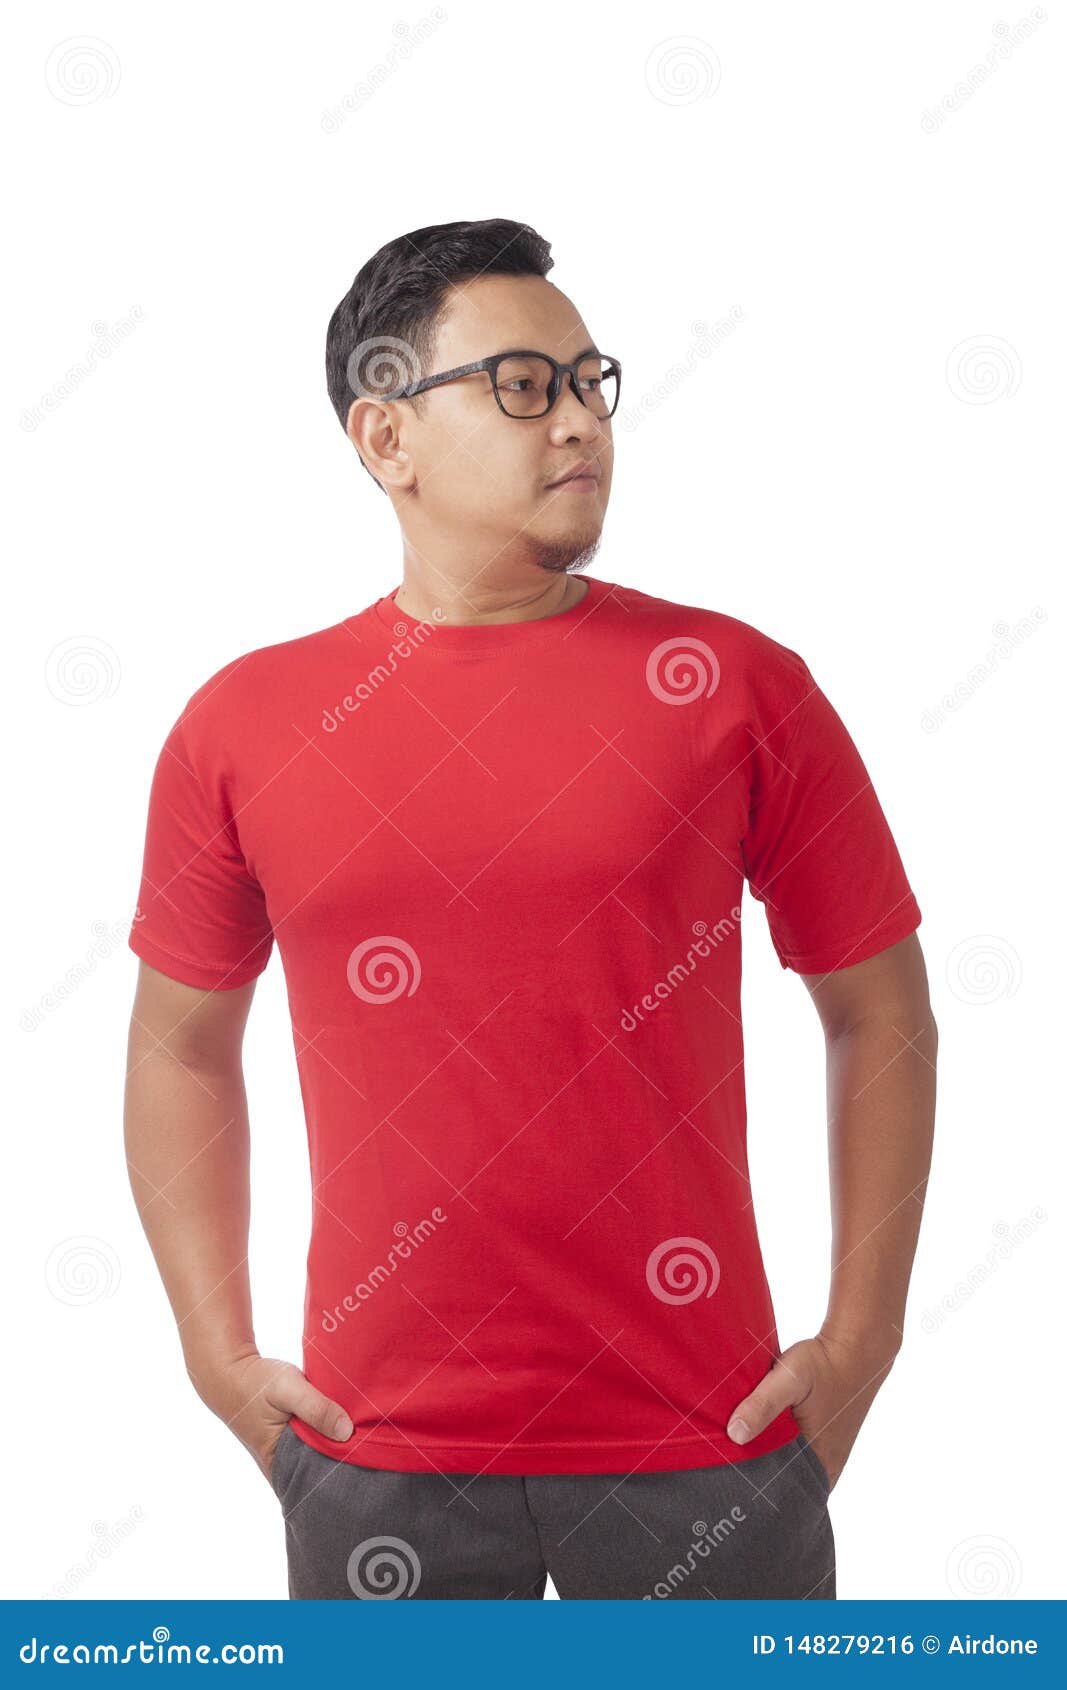 [View 29+] Vector Red T Shirt Mockup